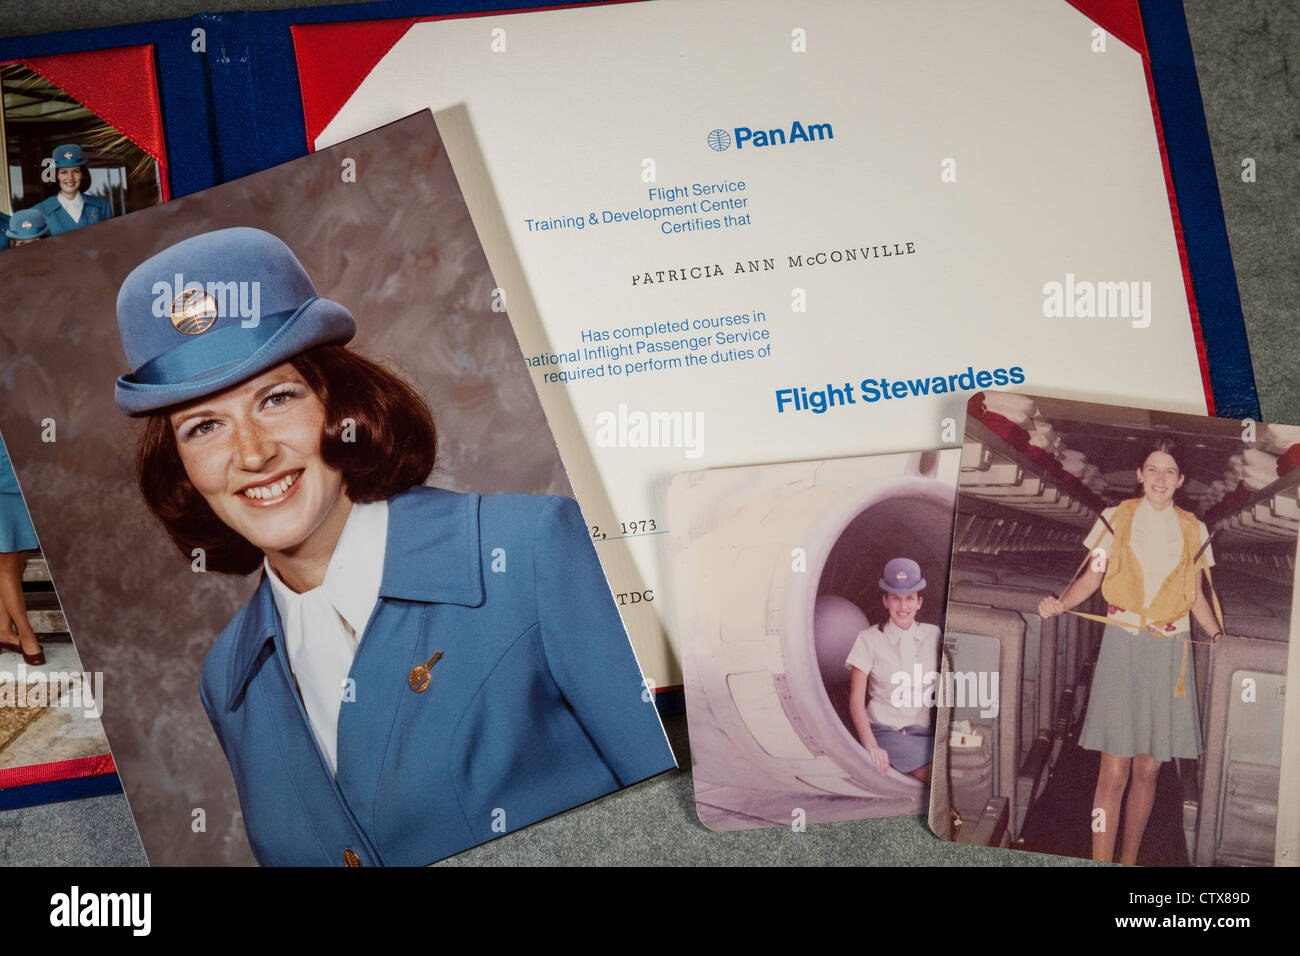 Pan American Airlines Flight Stewardess Graduation Diploma and Photo, 1973 Stock Photo